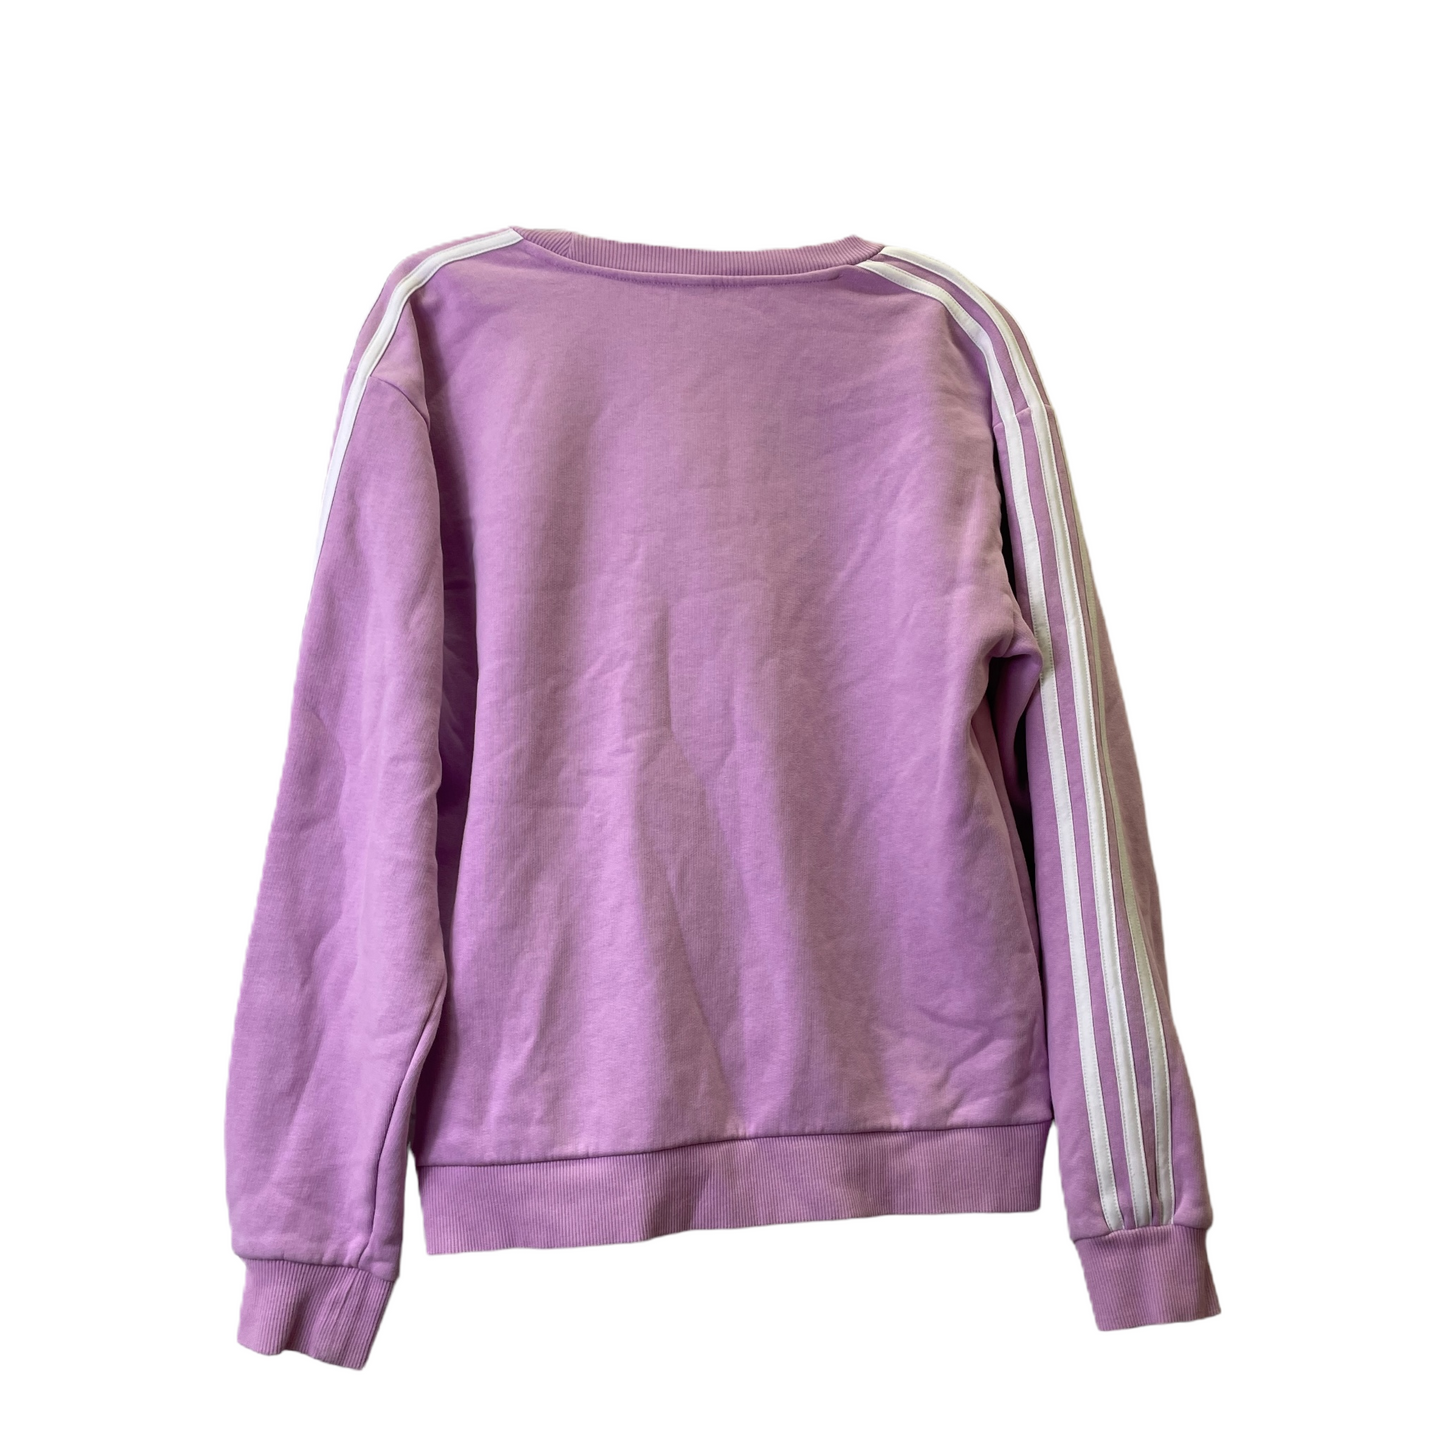 Purple Athletic Sweatshirt Crewneck By Adidas, Size: M